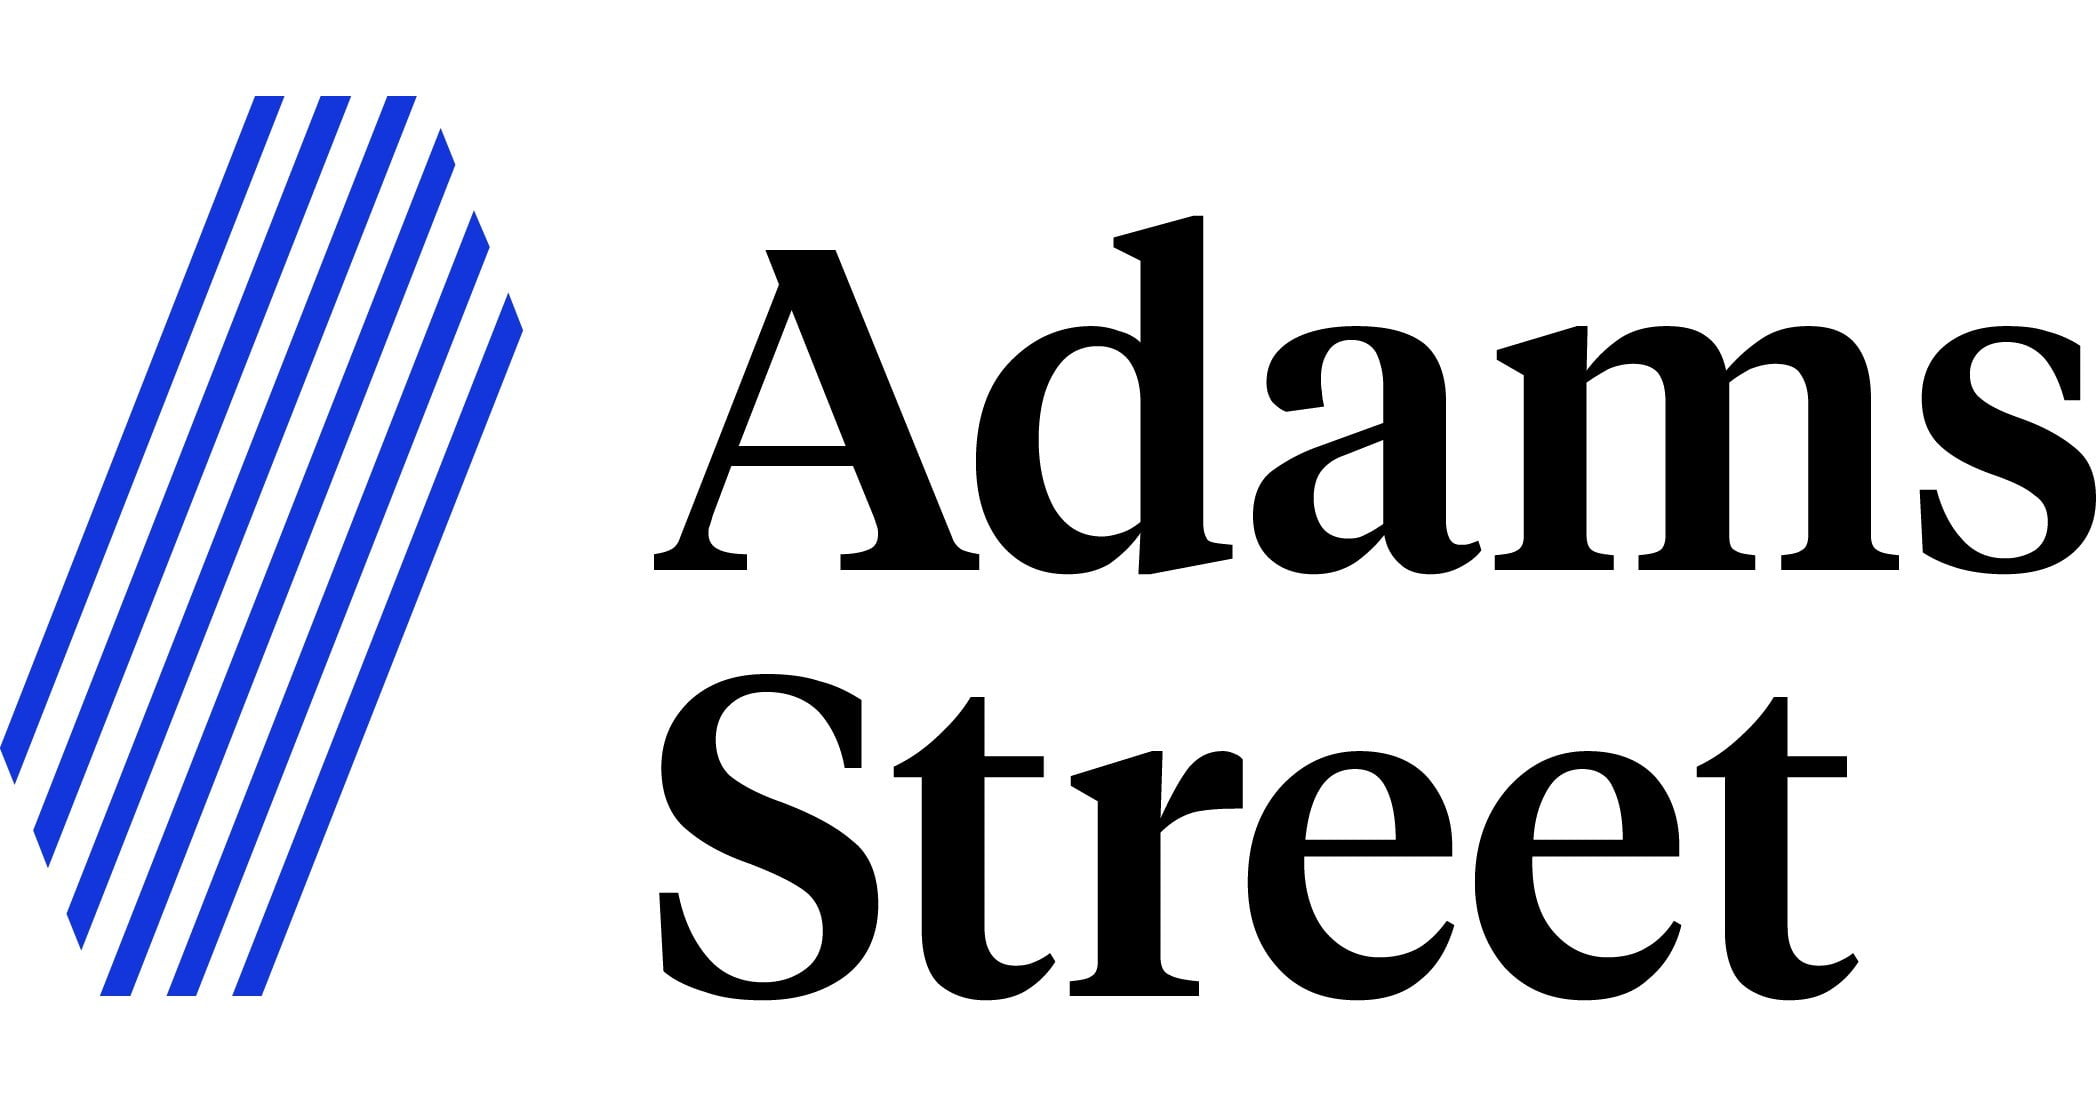 Adams Street Partners Logo